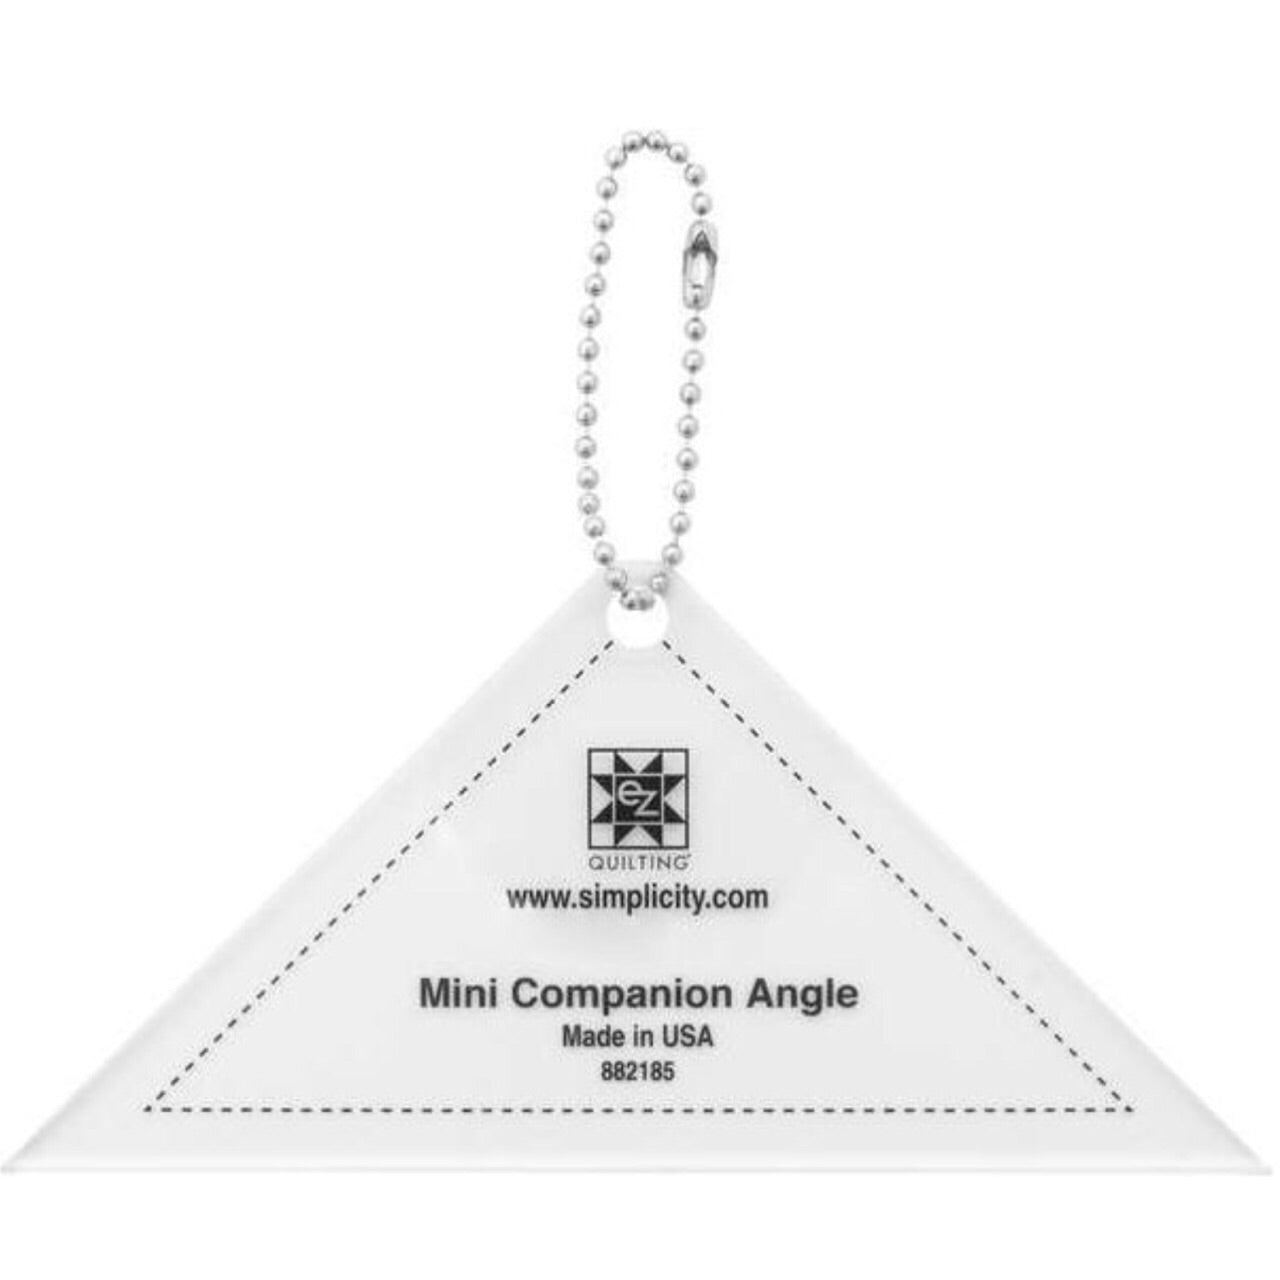 Mini Companion Angle Acrylic Tool - Keychain